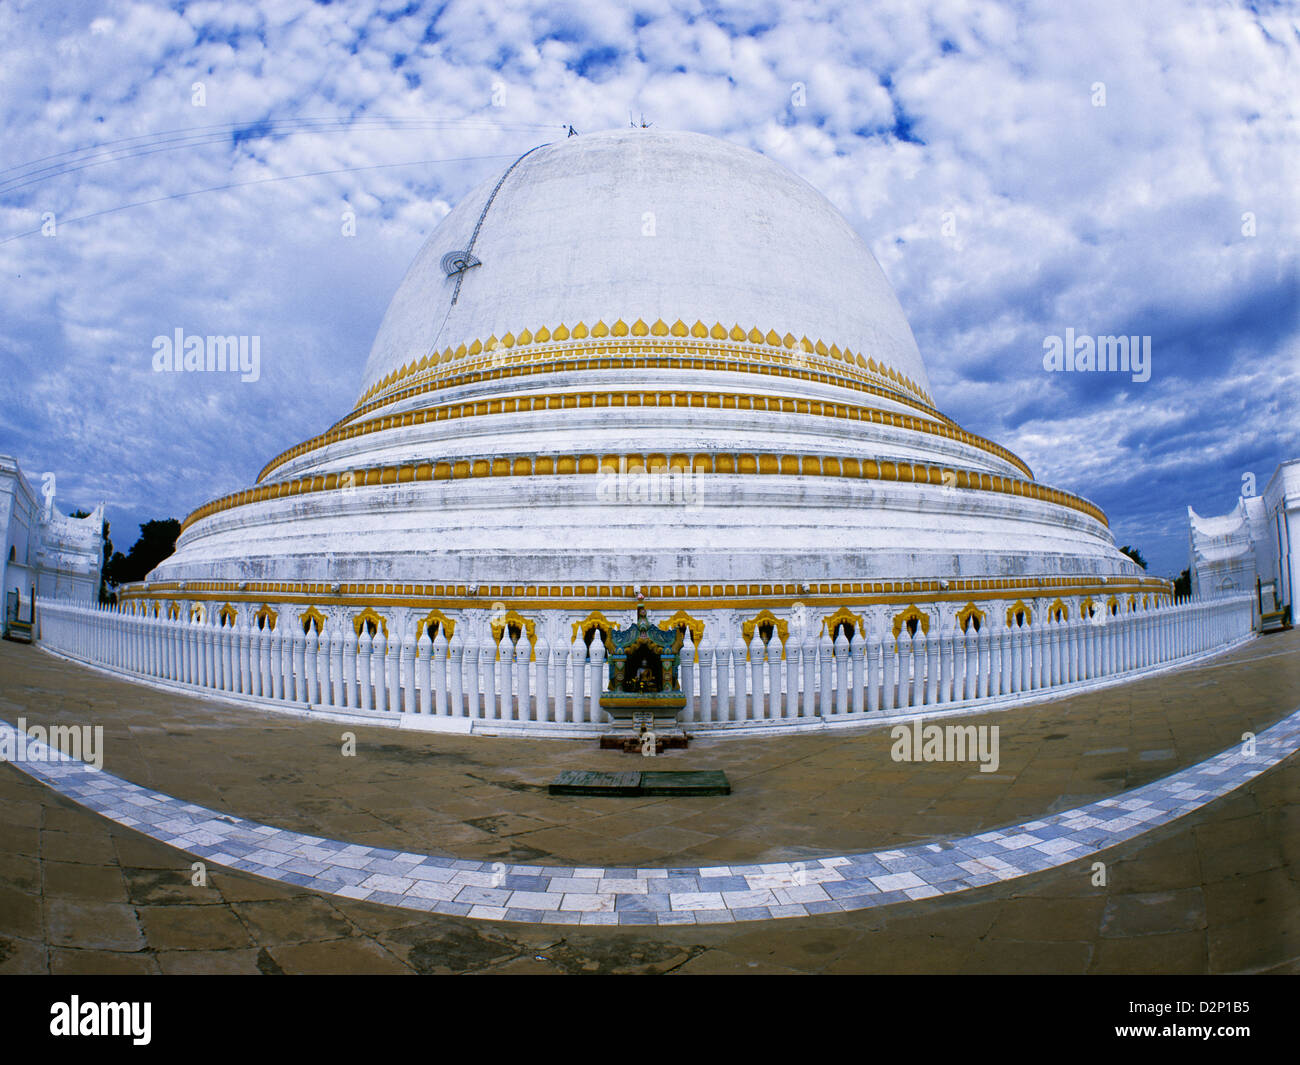 Myanmar Birmania, Mandalay Sagaing, Kaunghmudaw Paya, e l'enorme duomo sorge a 46 metri come un emisfero perfetto Foto Stock